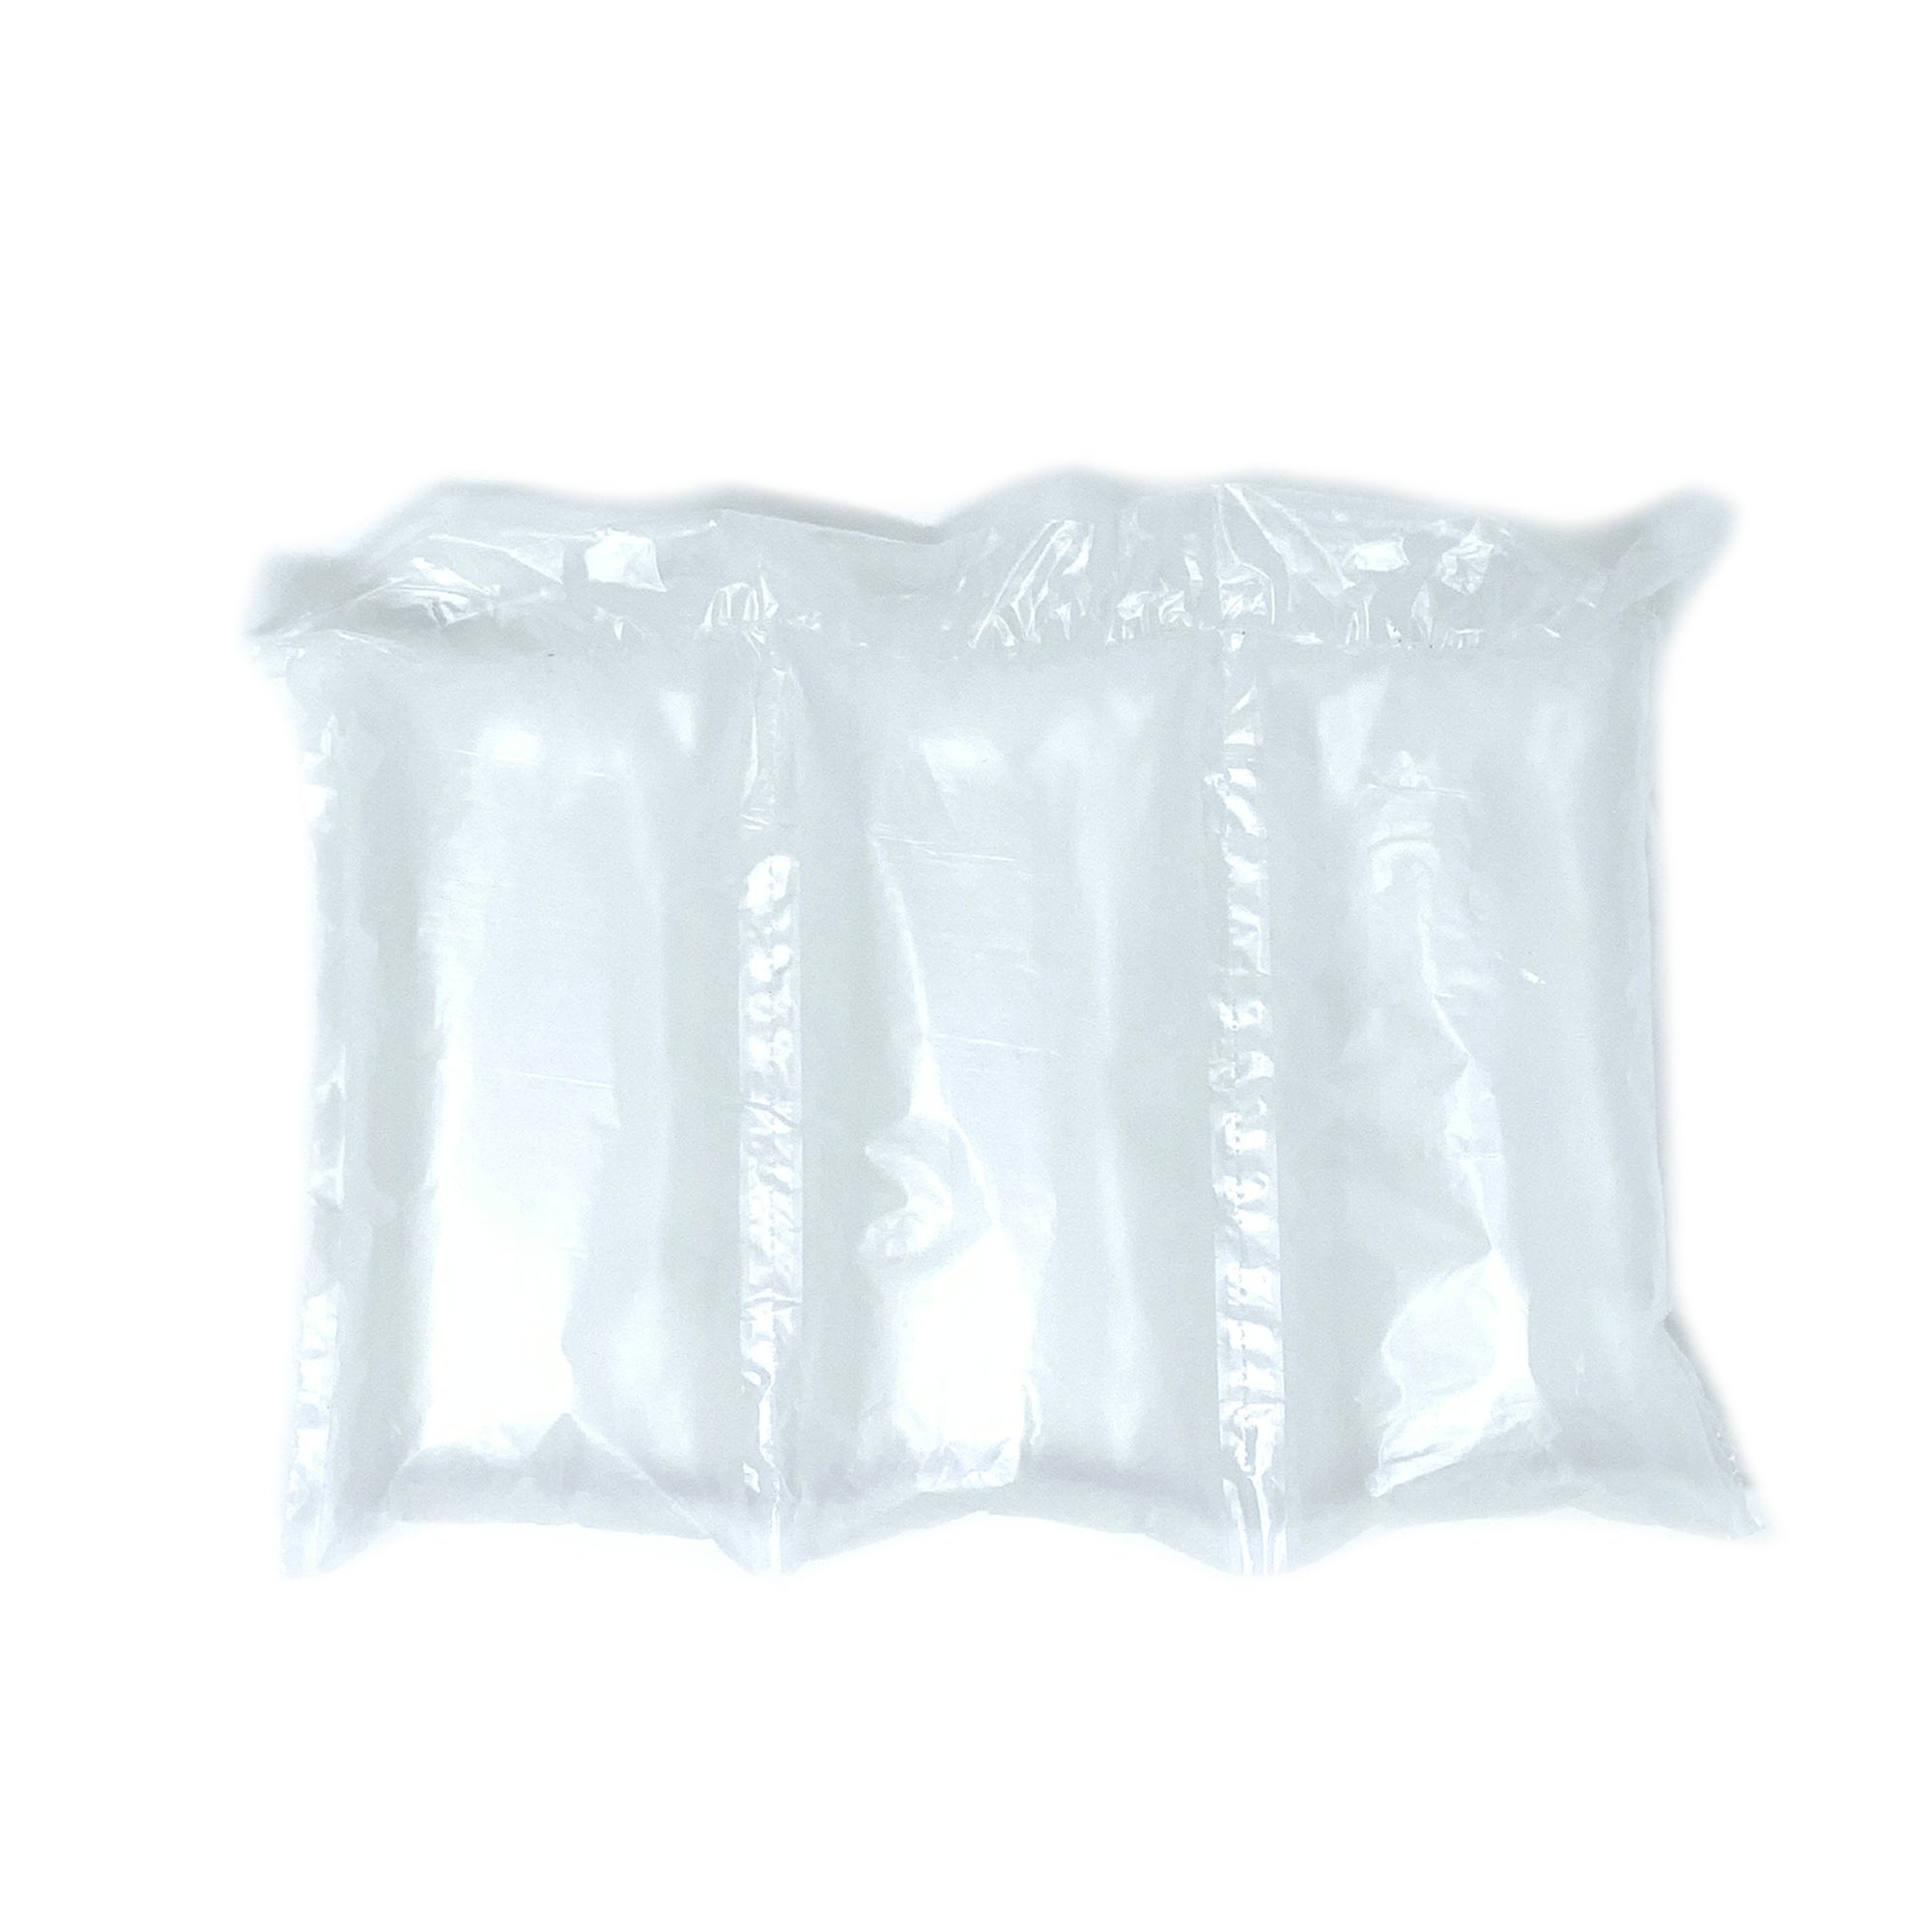 UOFFICE 150 Air Pillows 8x4 Pre-Filled Packaging Shipping Cushion 